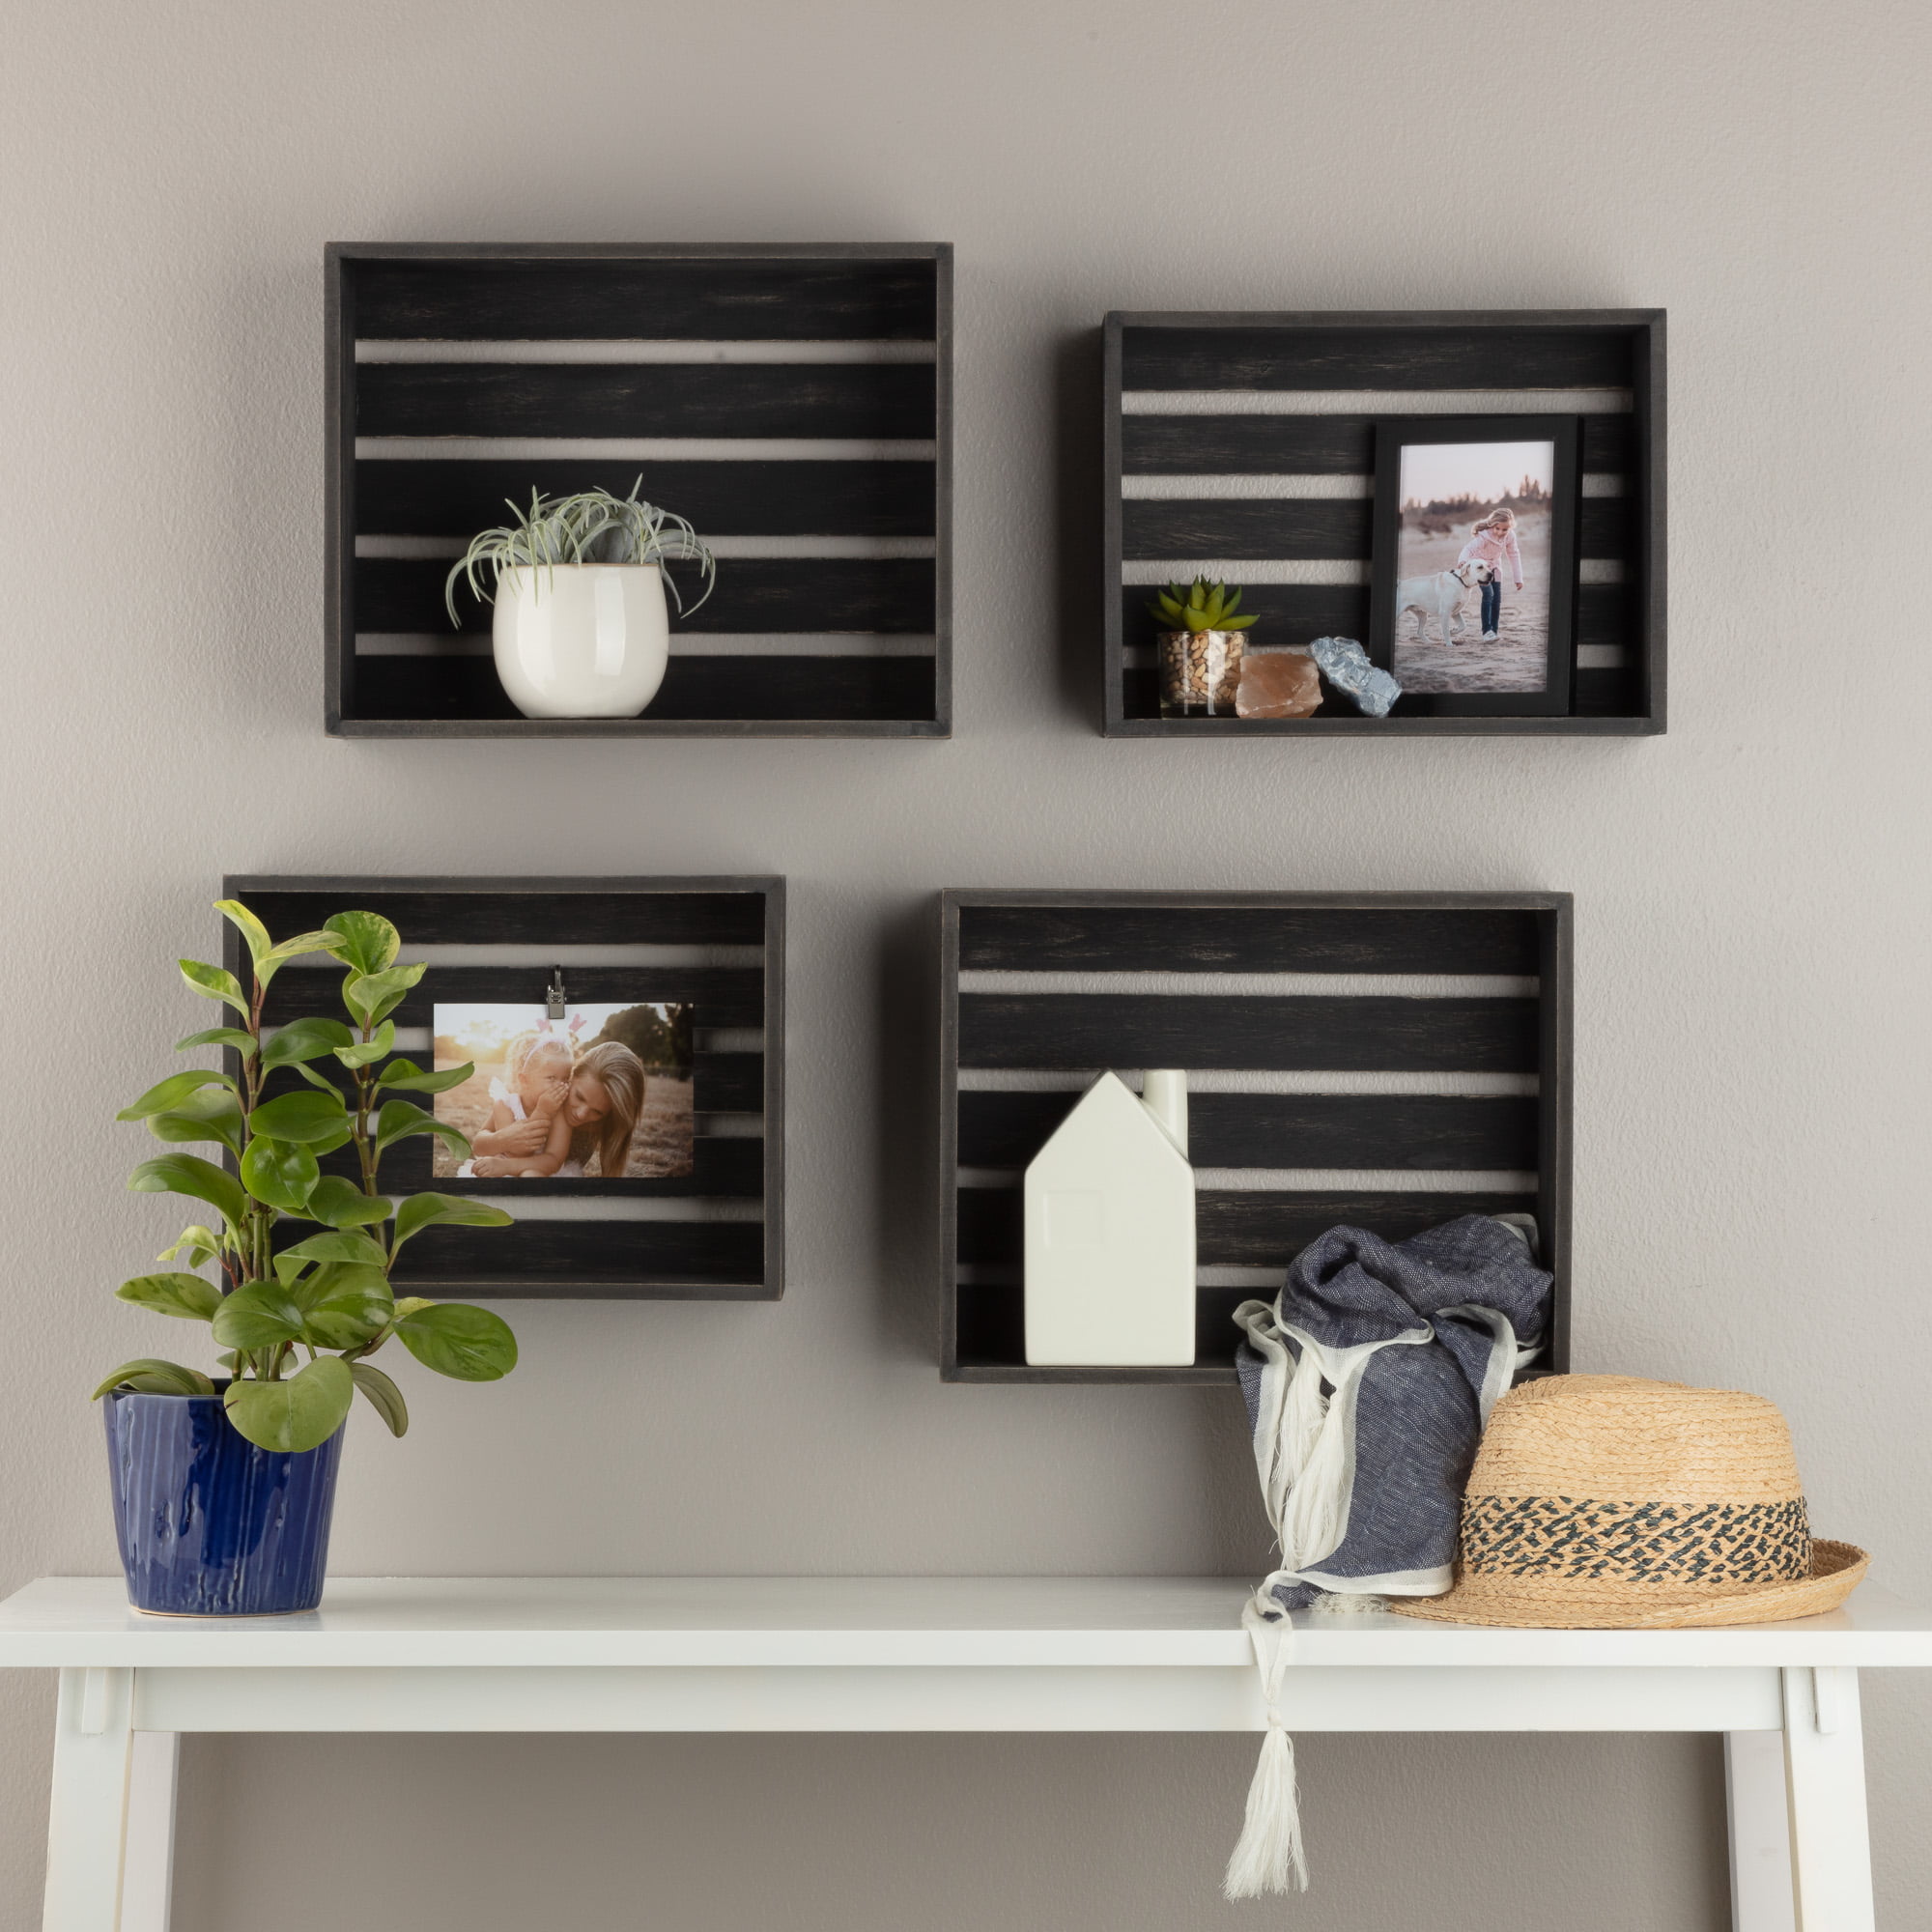 Gallery Solutions Wood Floating Shelves, Black Wood Wall Shelves